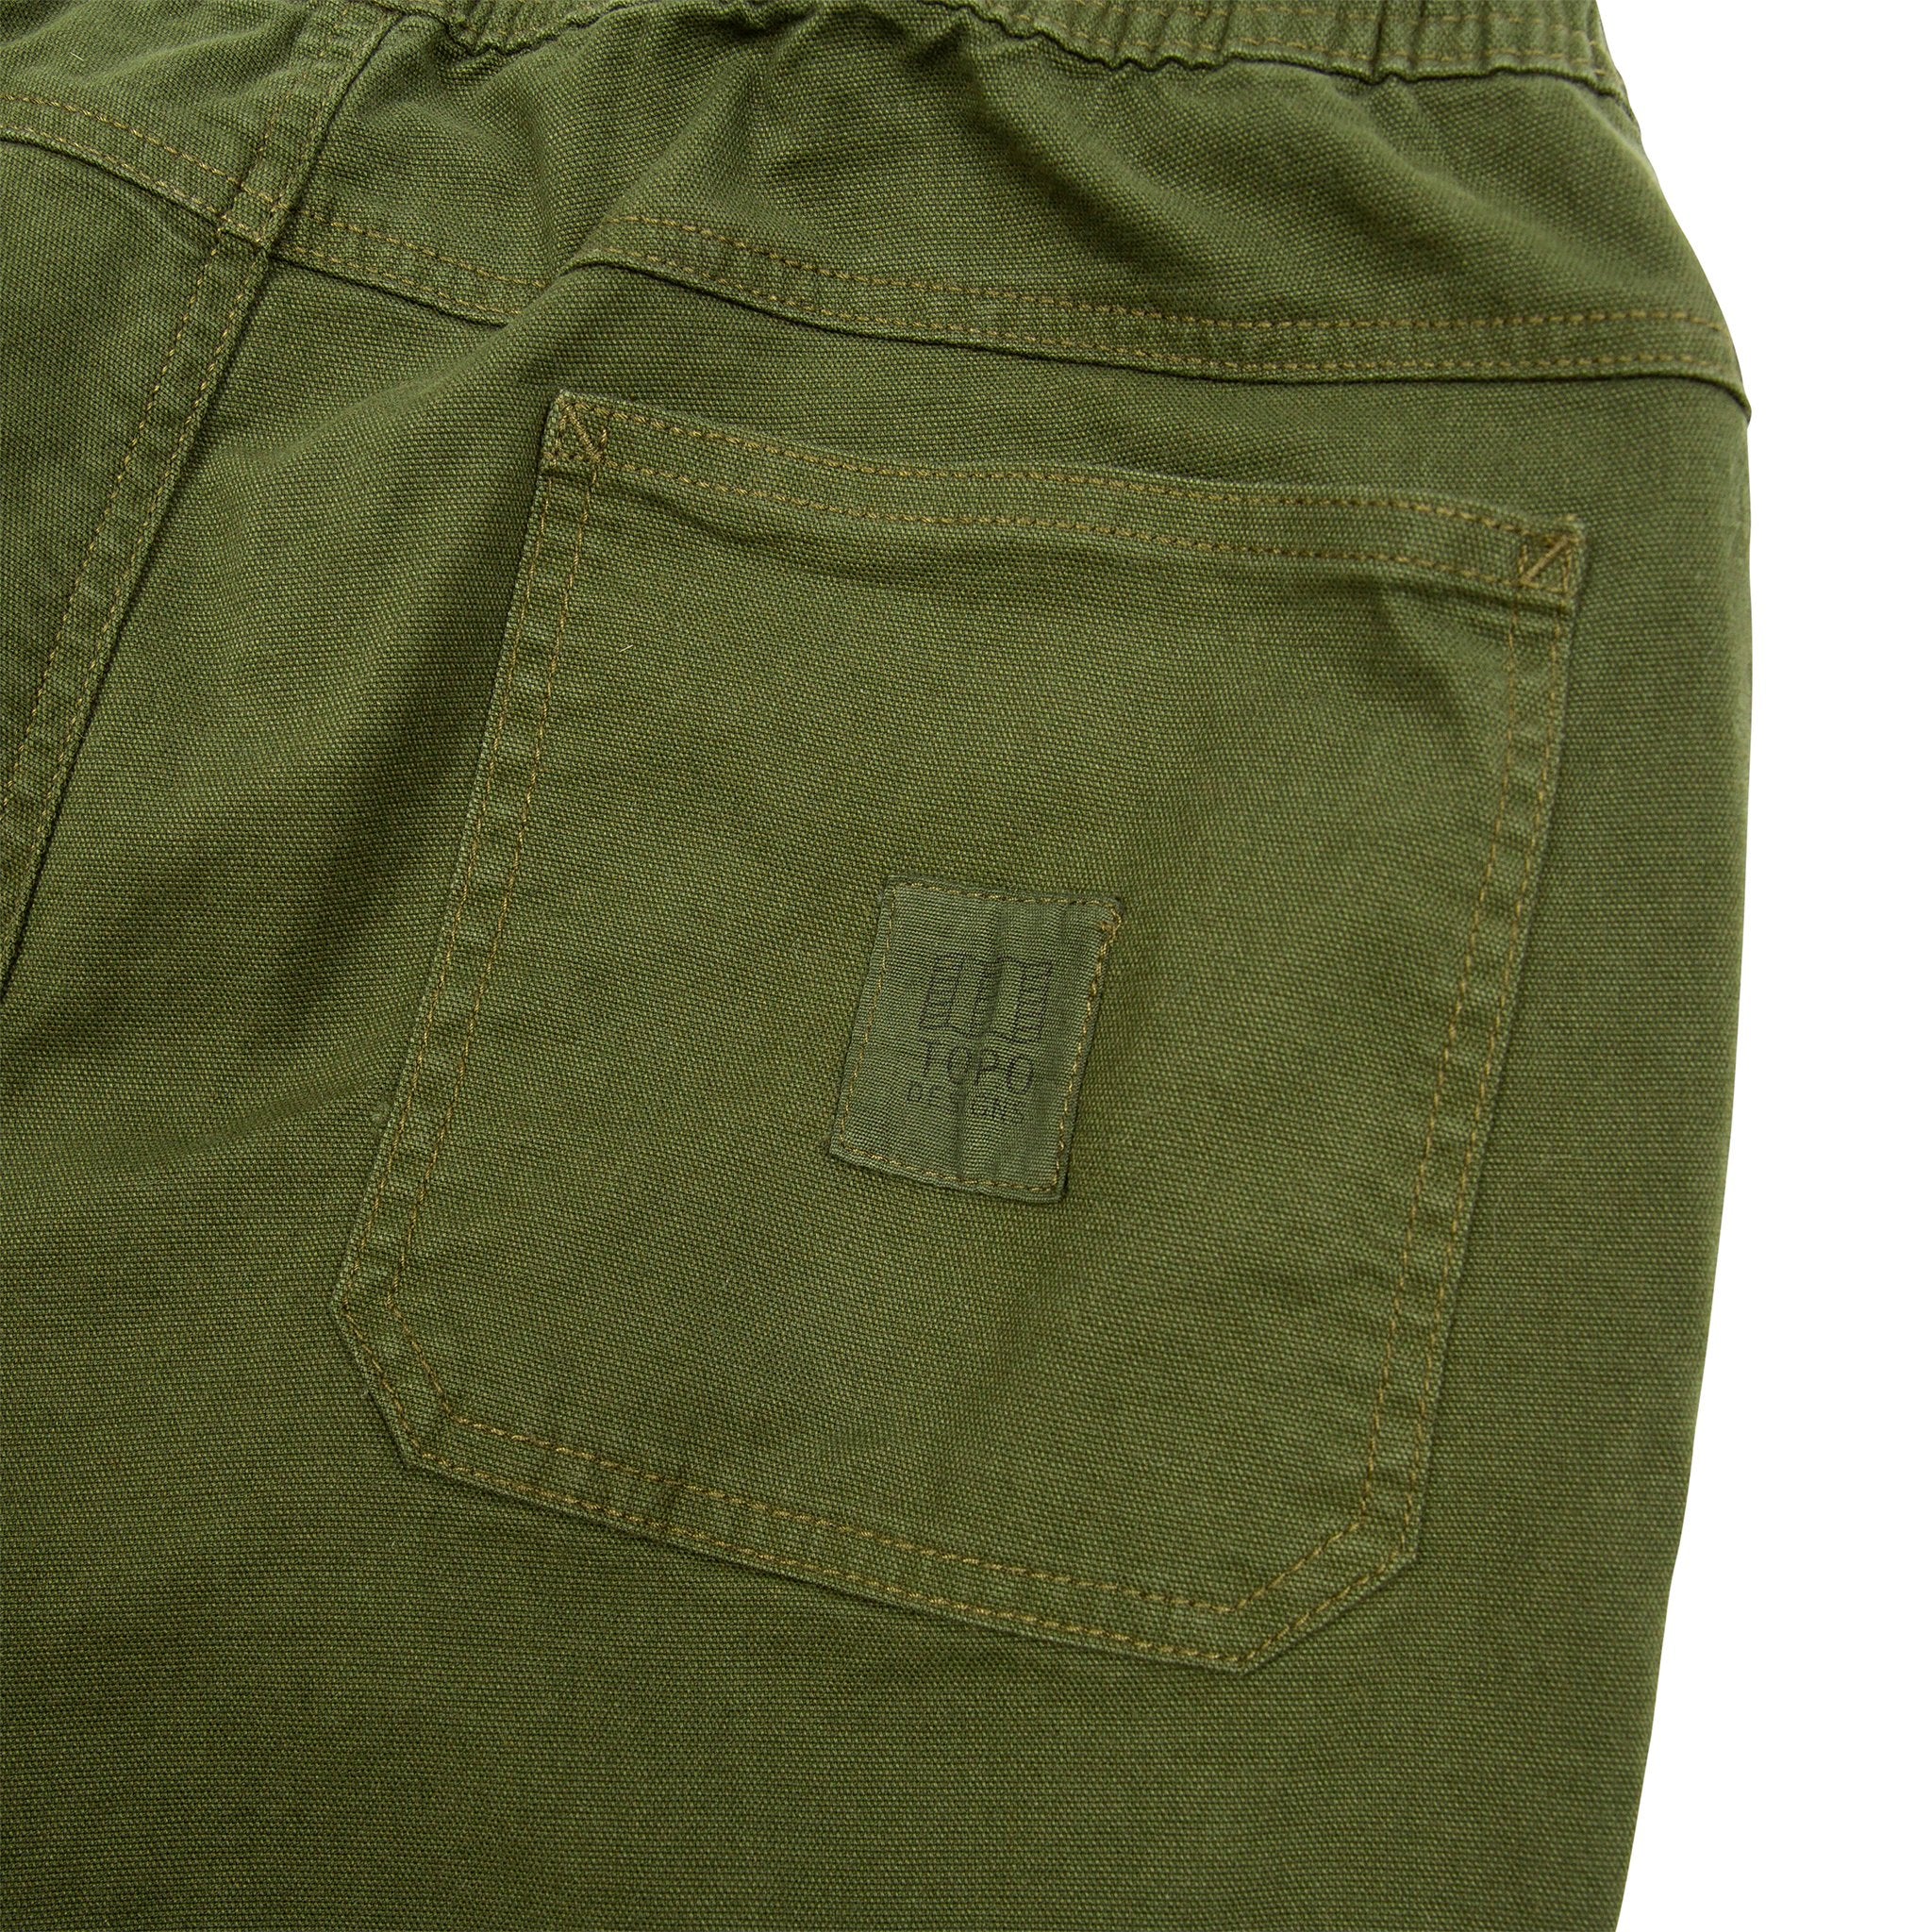 General detail shot of Topo Designs Men's Dirt Pants in Olive green showing back pockets.